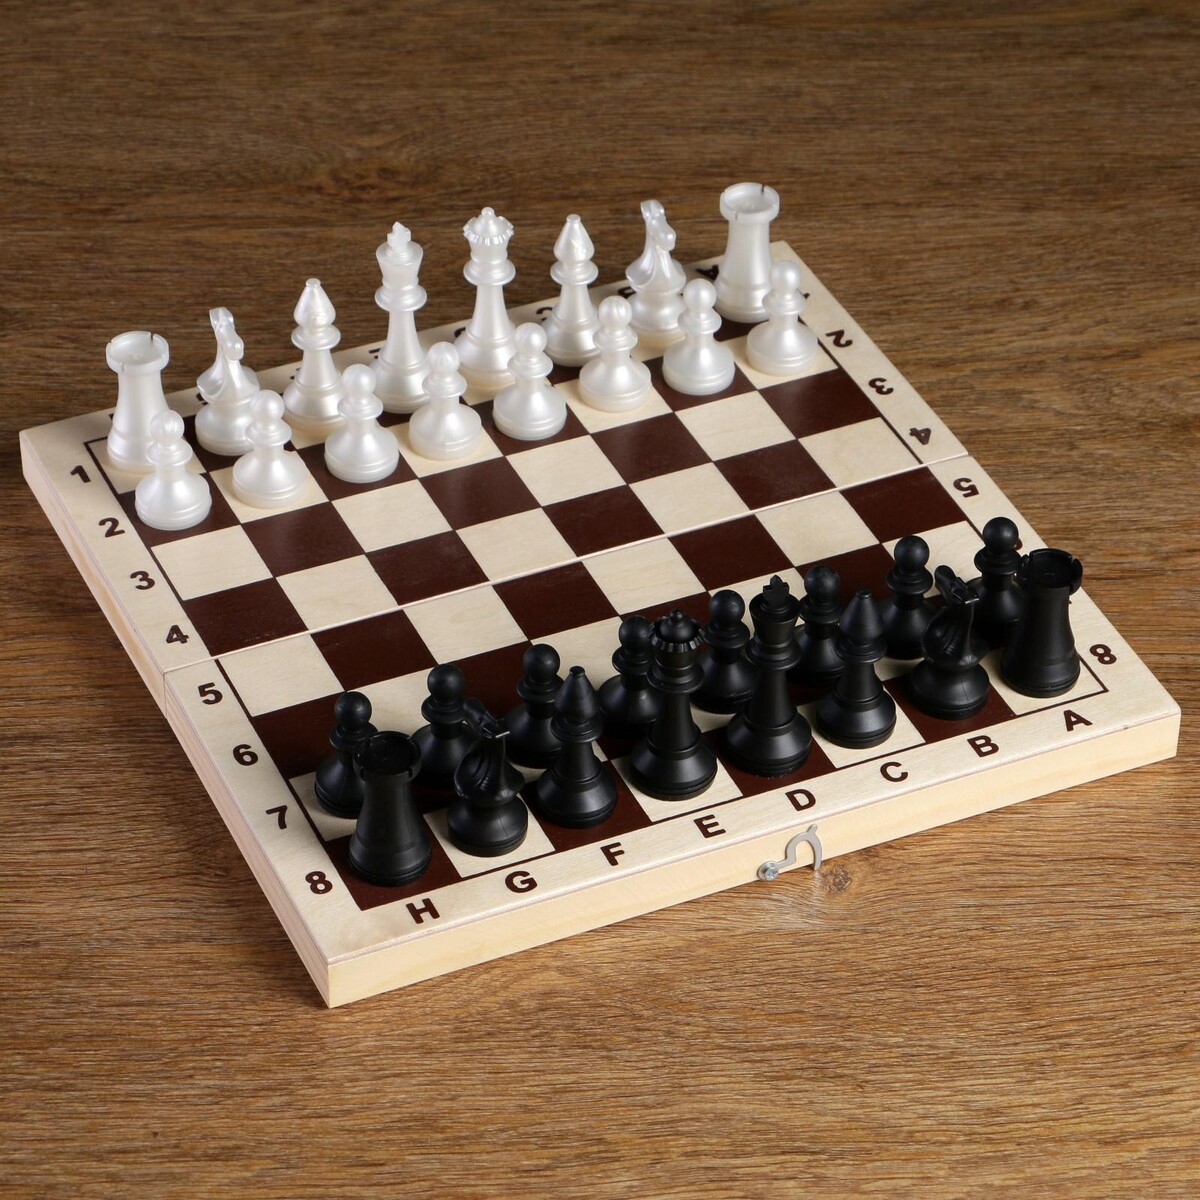 Шахматные фигуры обиходные, пластик, король h-7.2 см, пешка 4 см шахматные фигуры обиходные король h 7 см пешка 4 см пластик